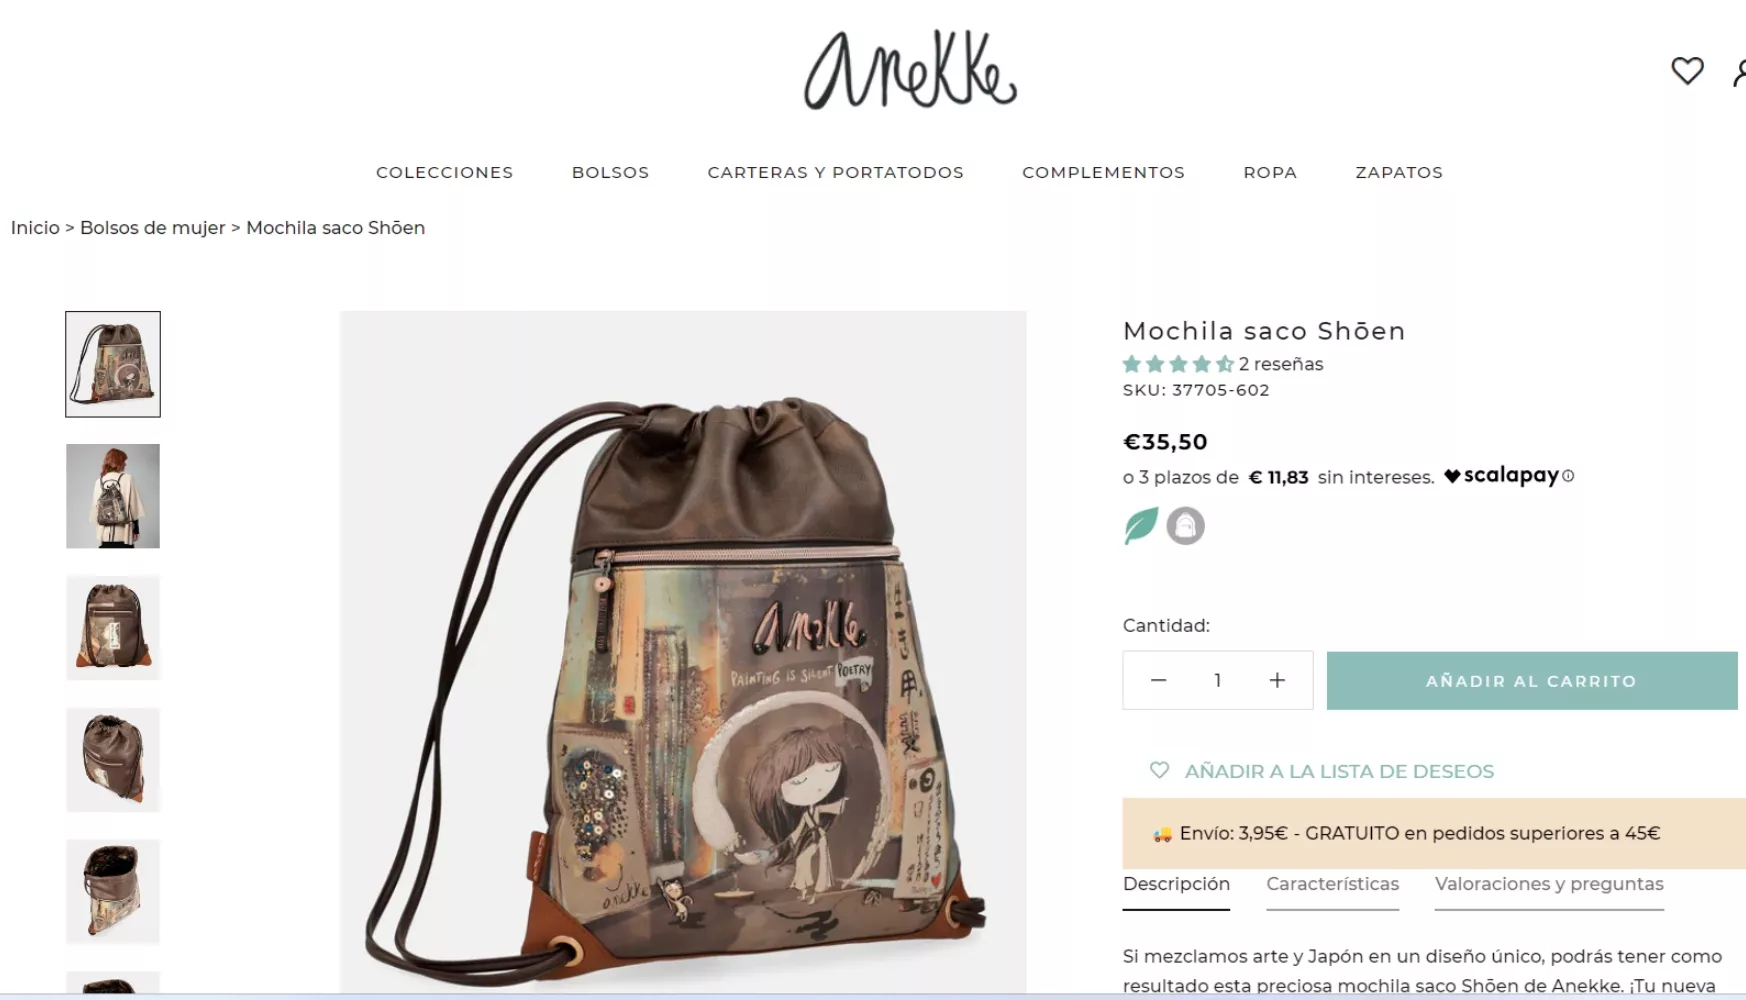 Mochila saco de Anekke / ANEKKE